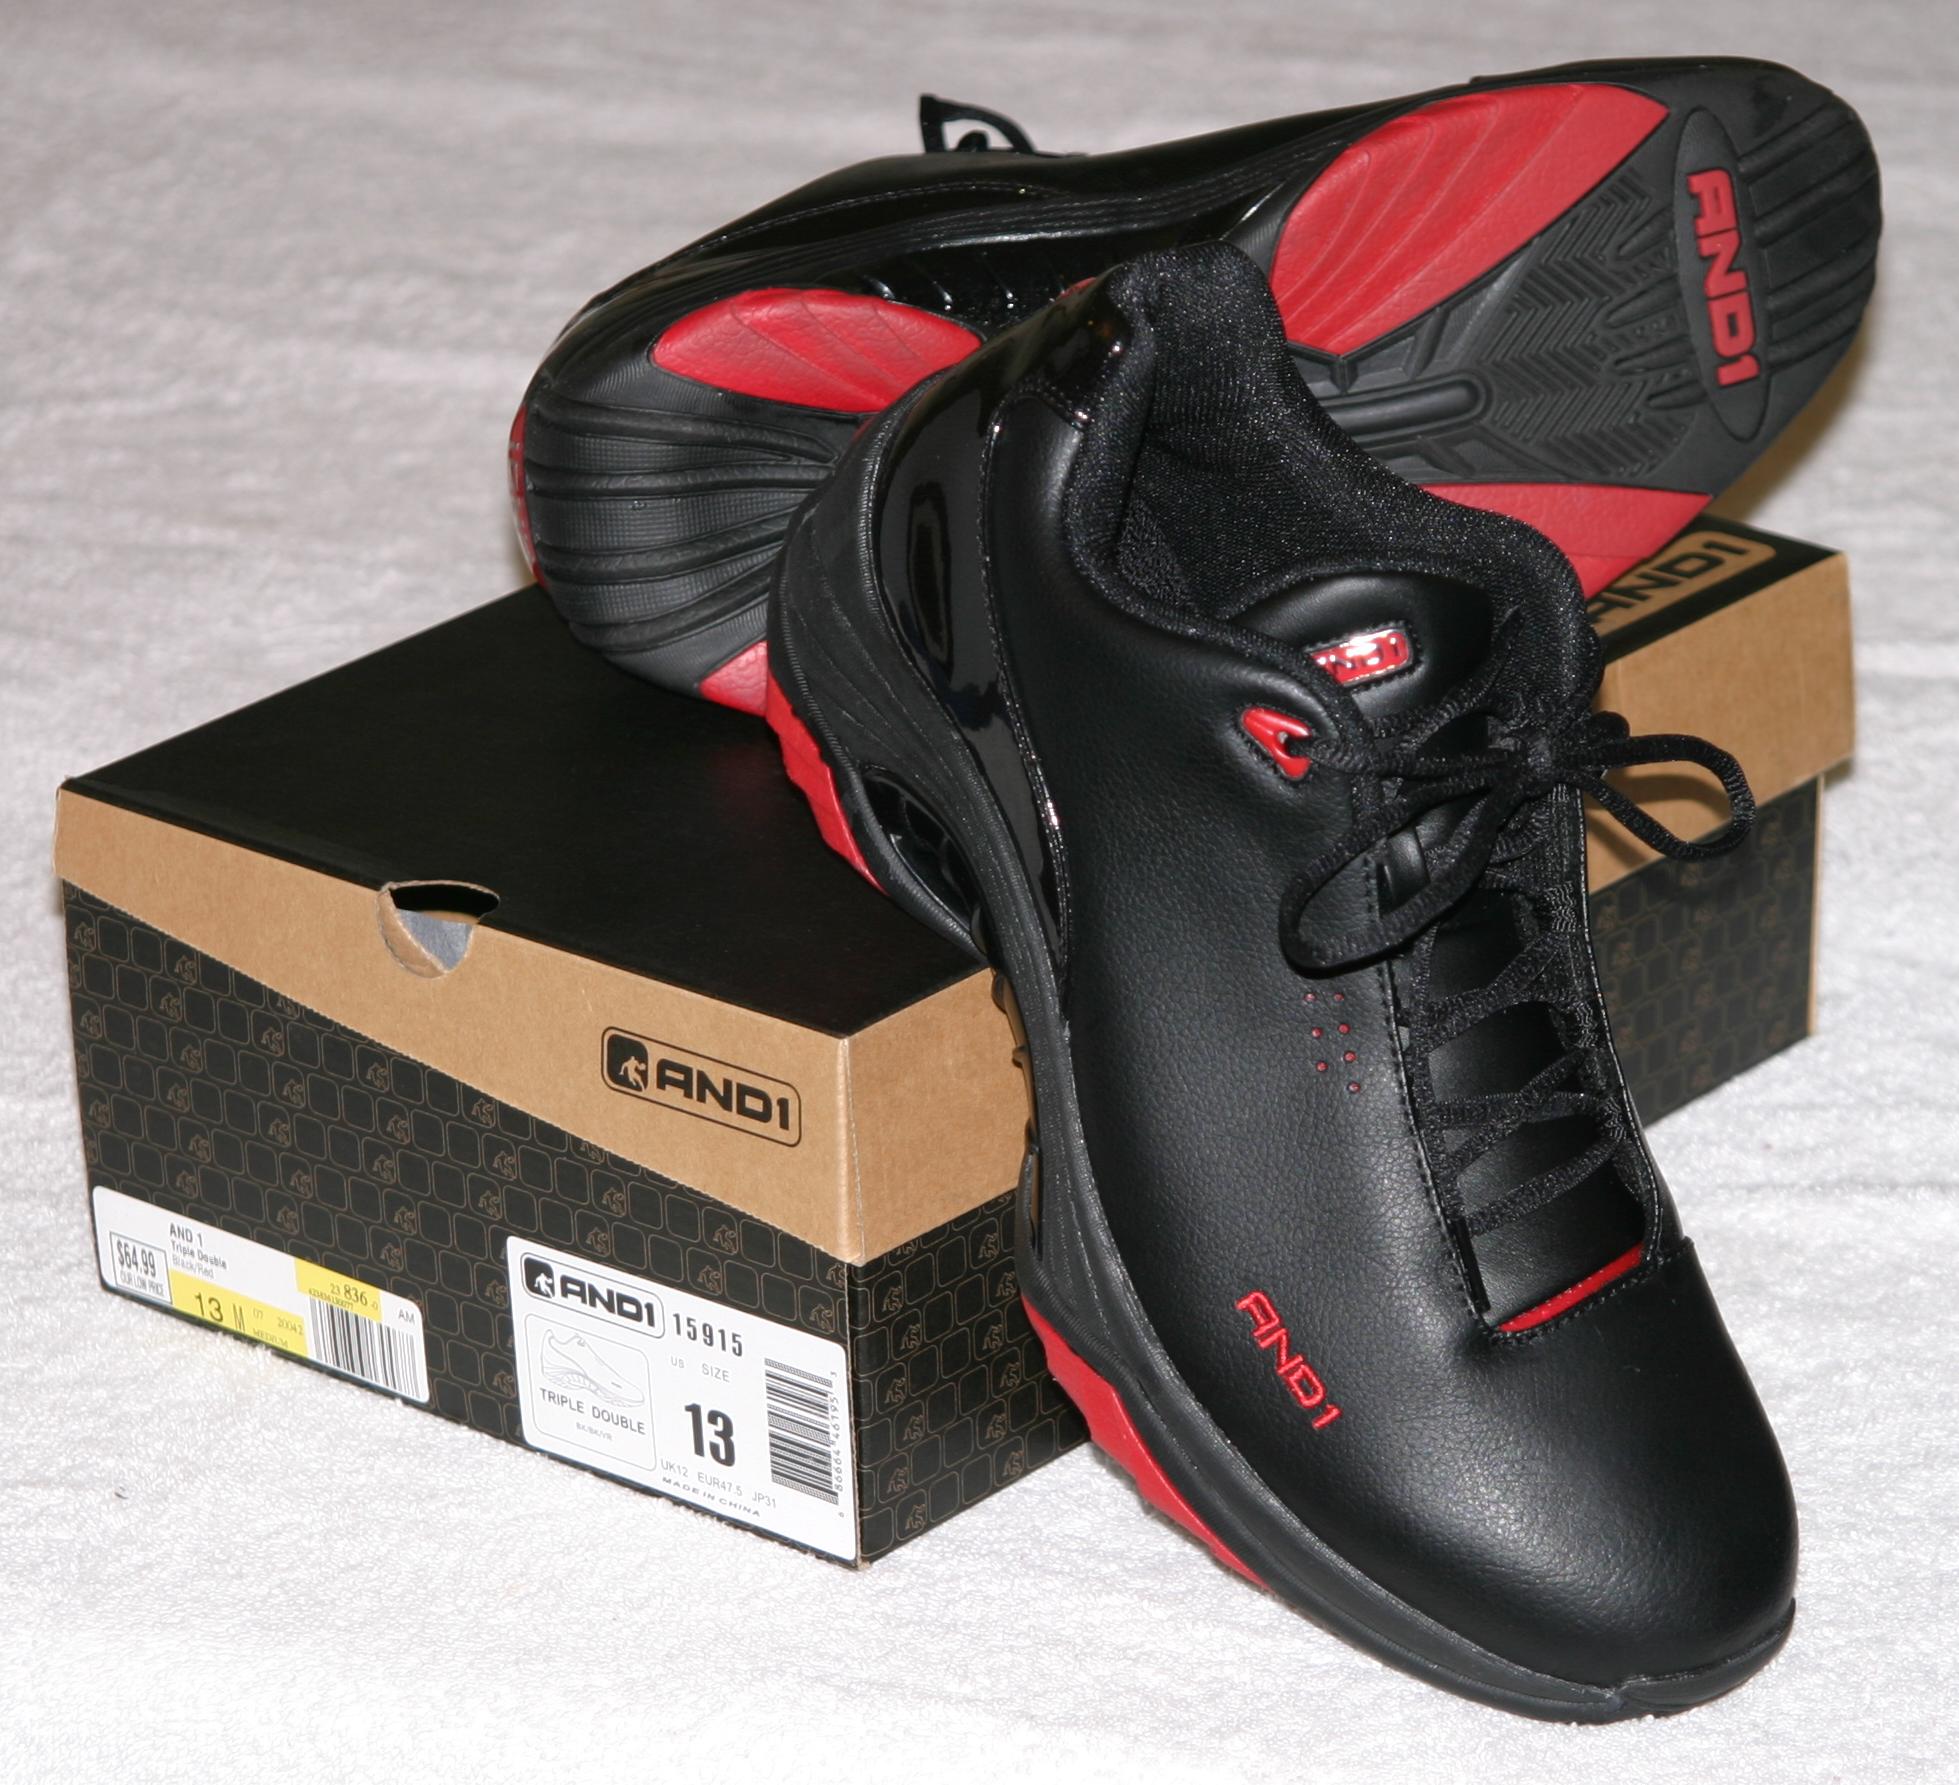 And1_basketball_shoes.jpg